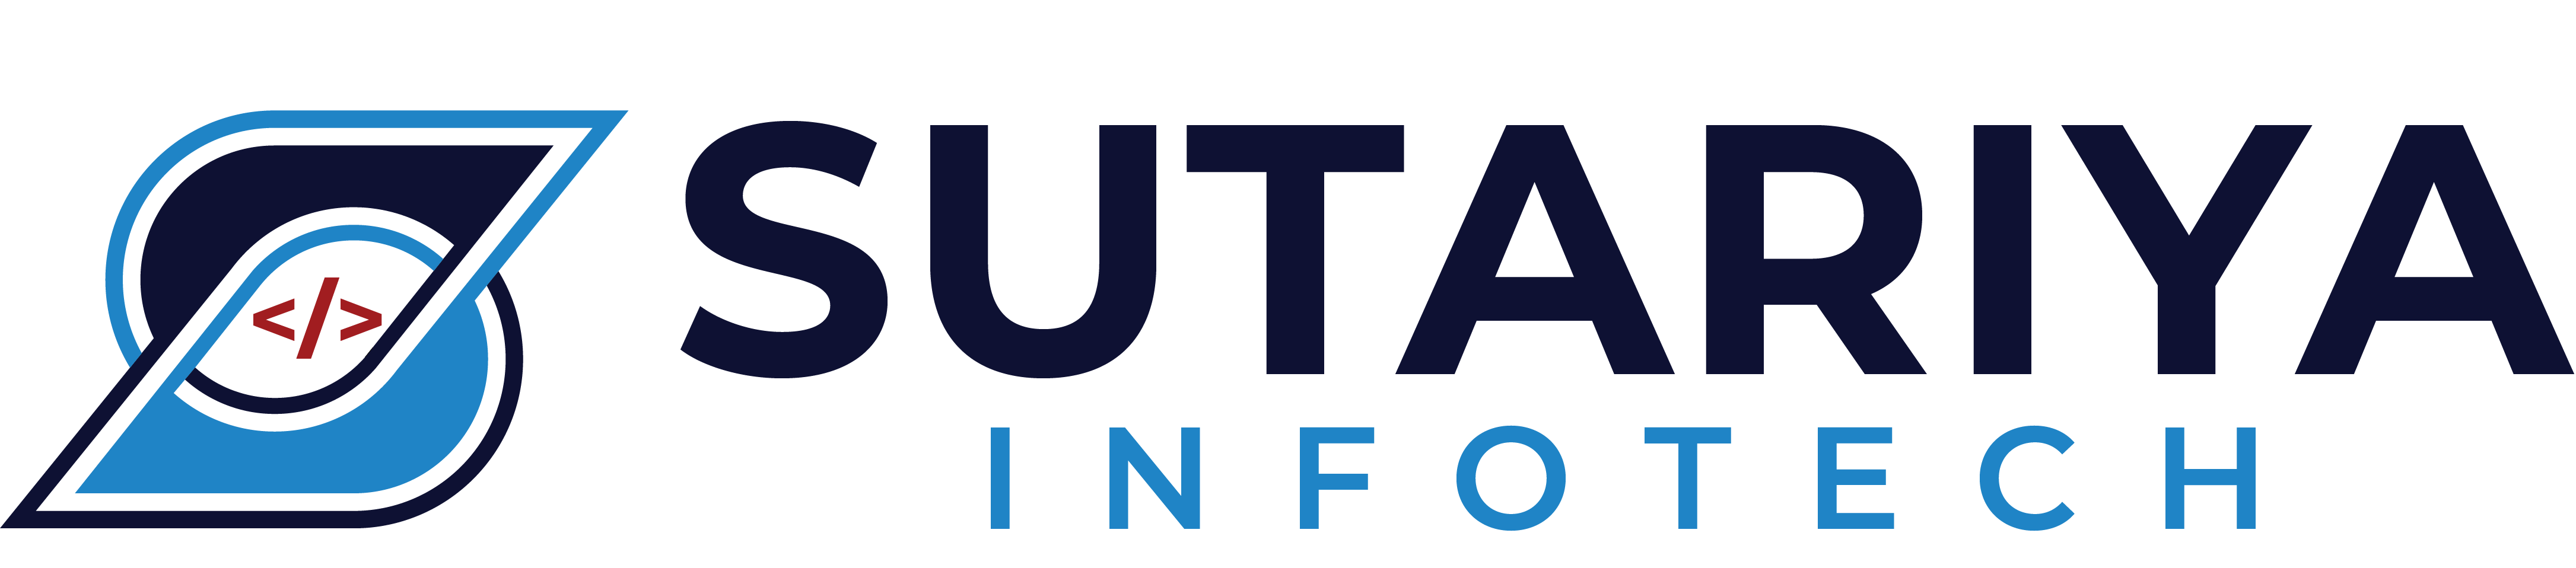 Sutariya Infotech logo